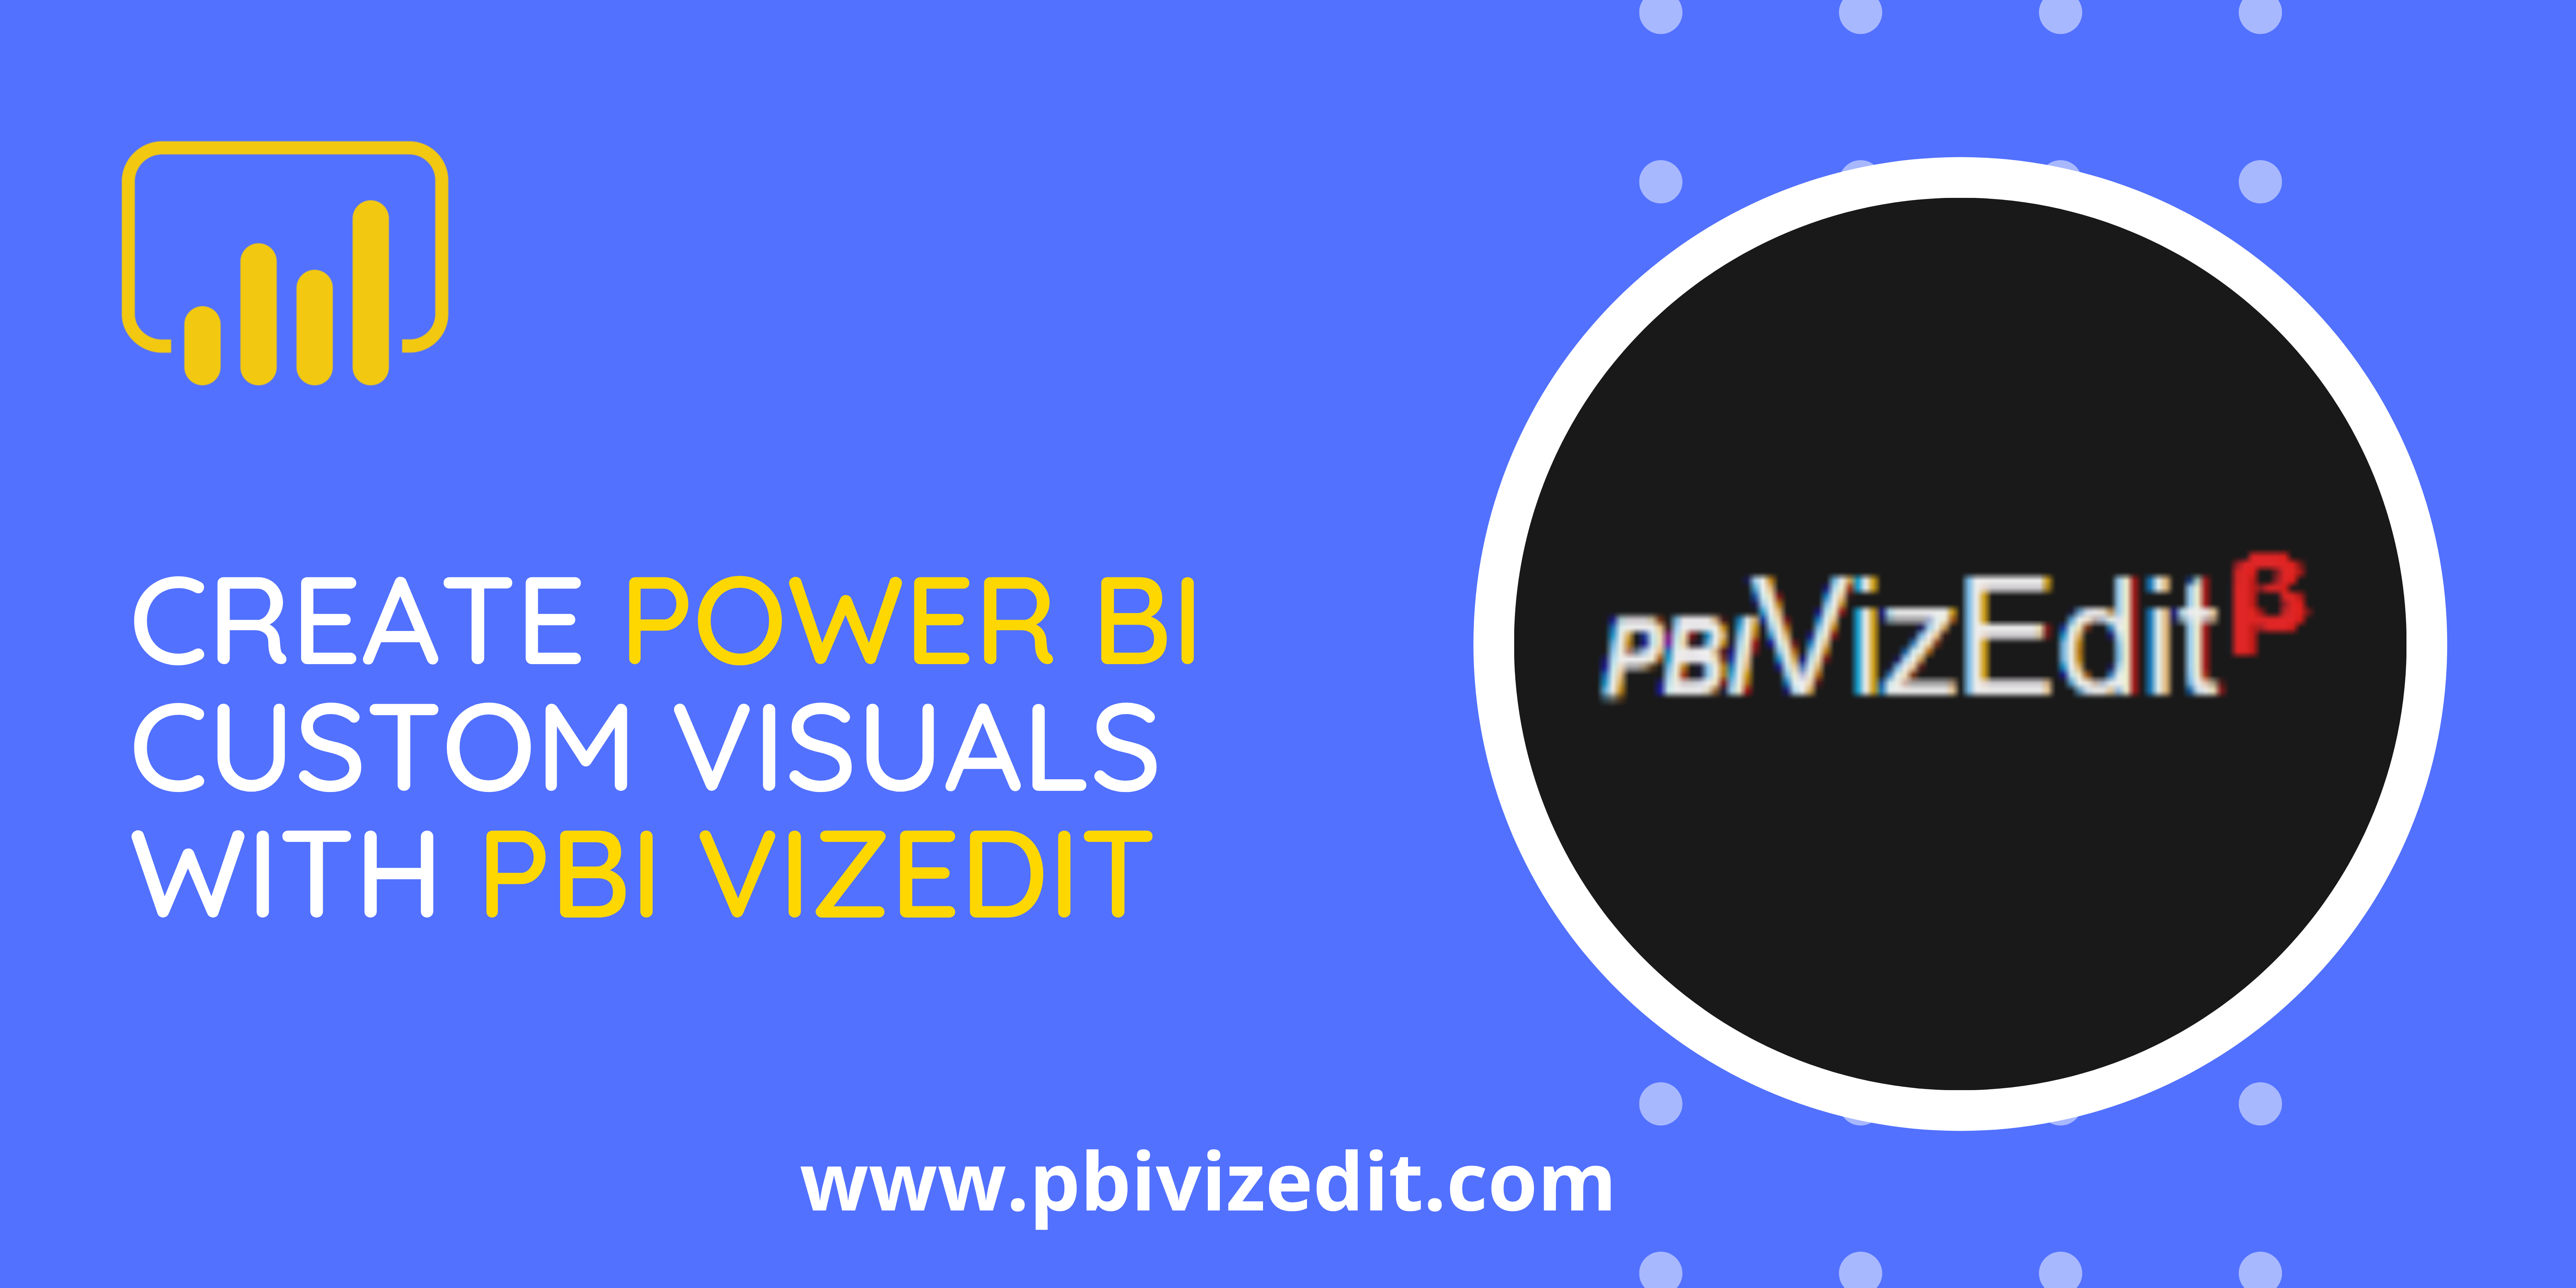 Create Power BI custom visuals with PBI VizEdit. 